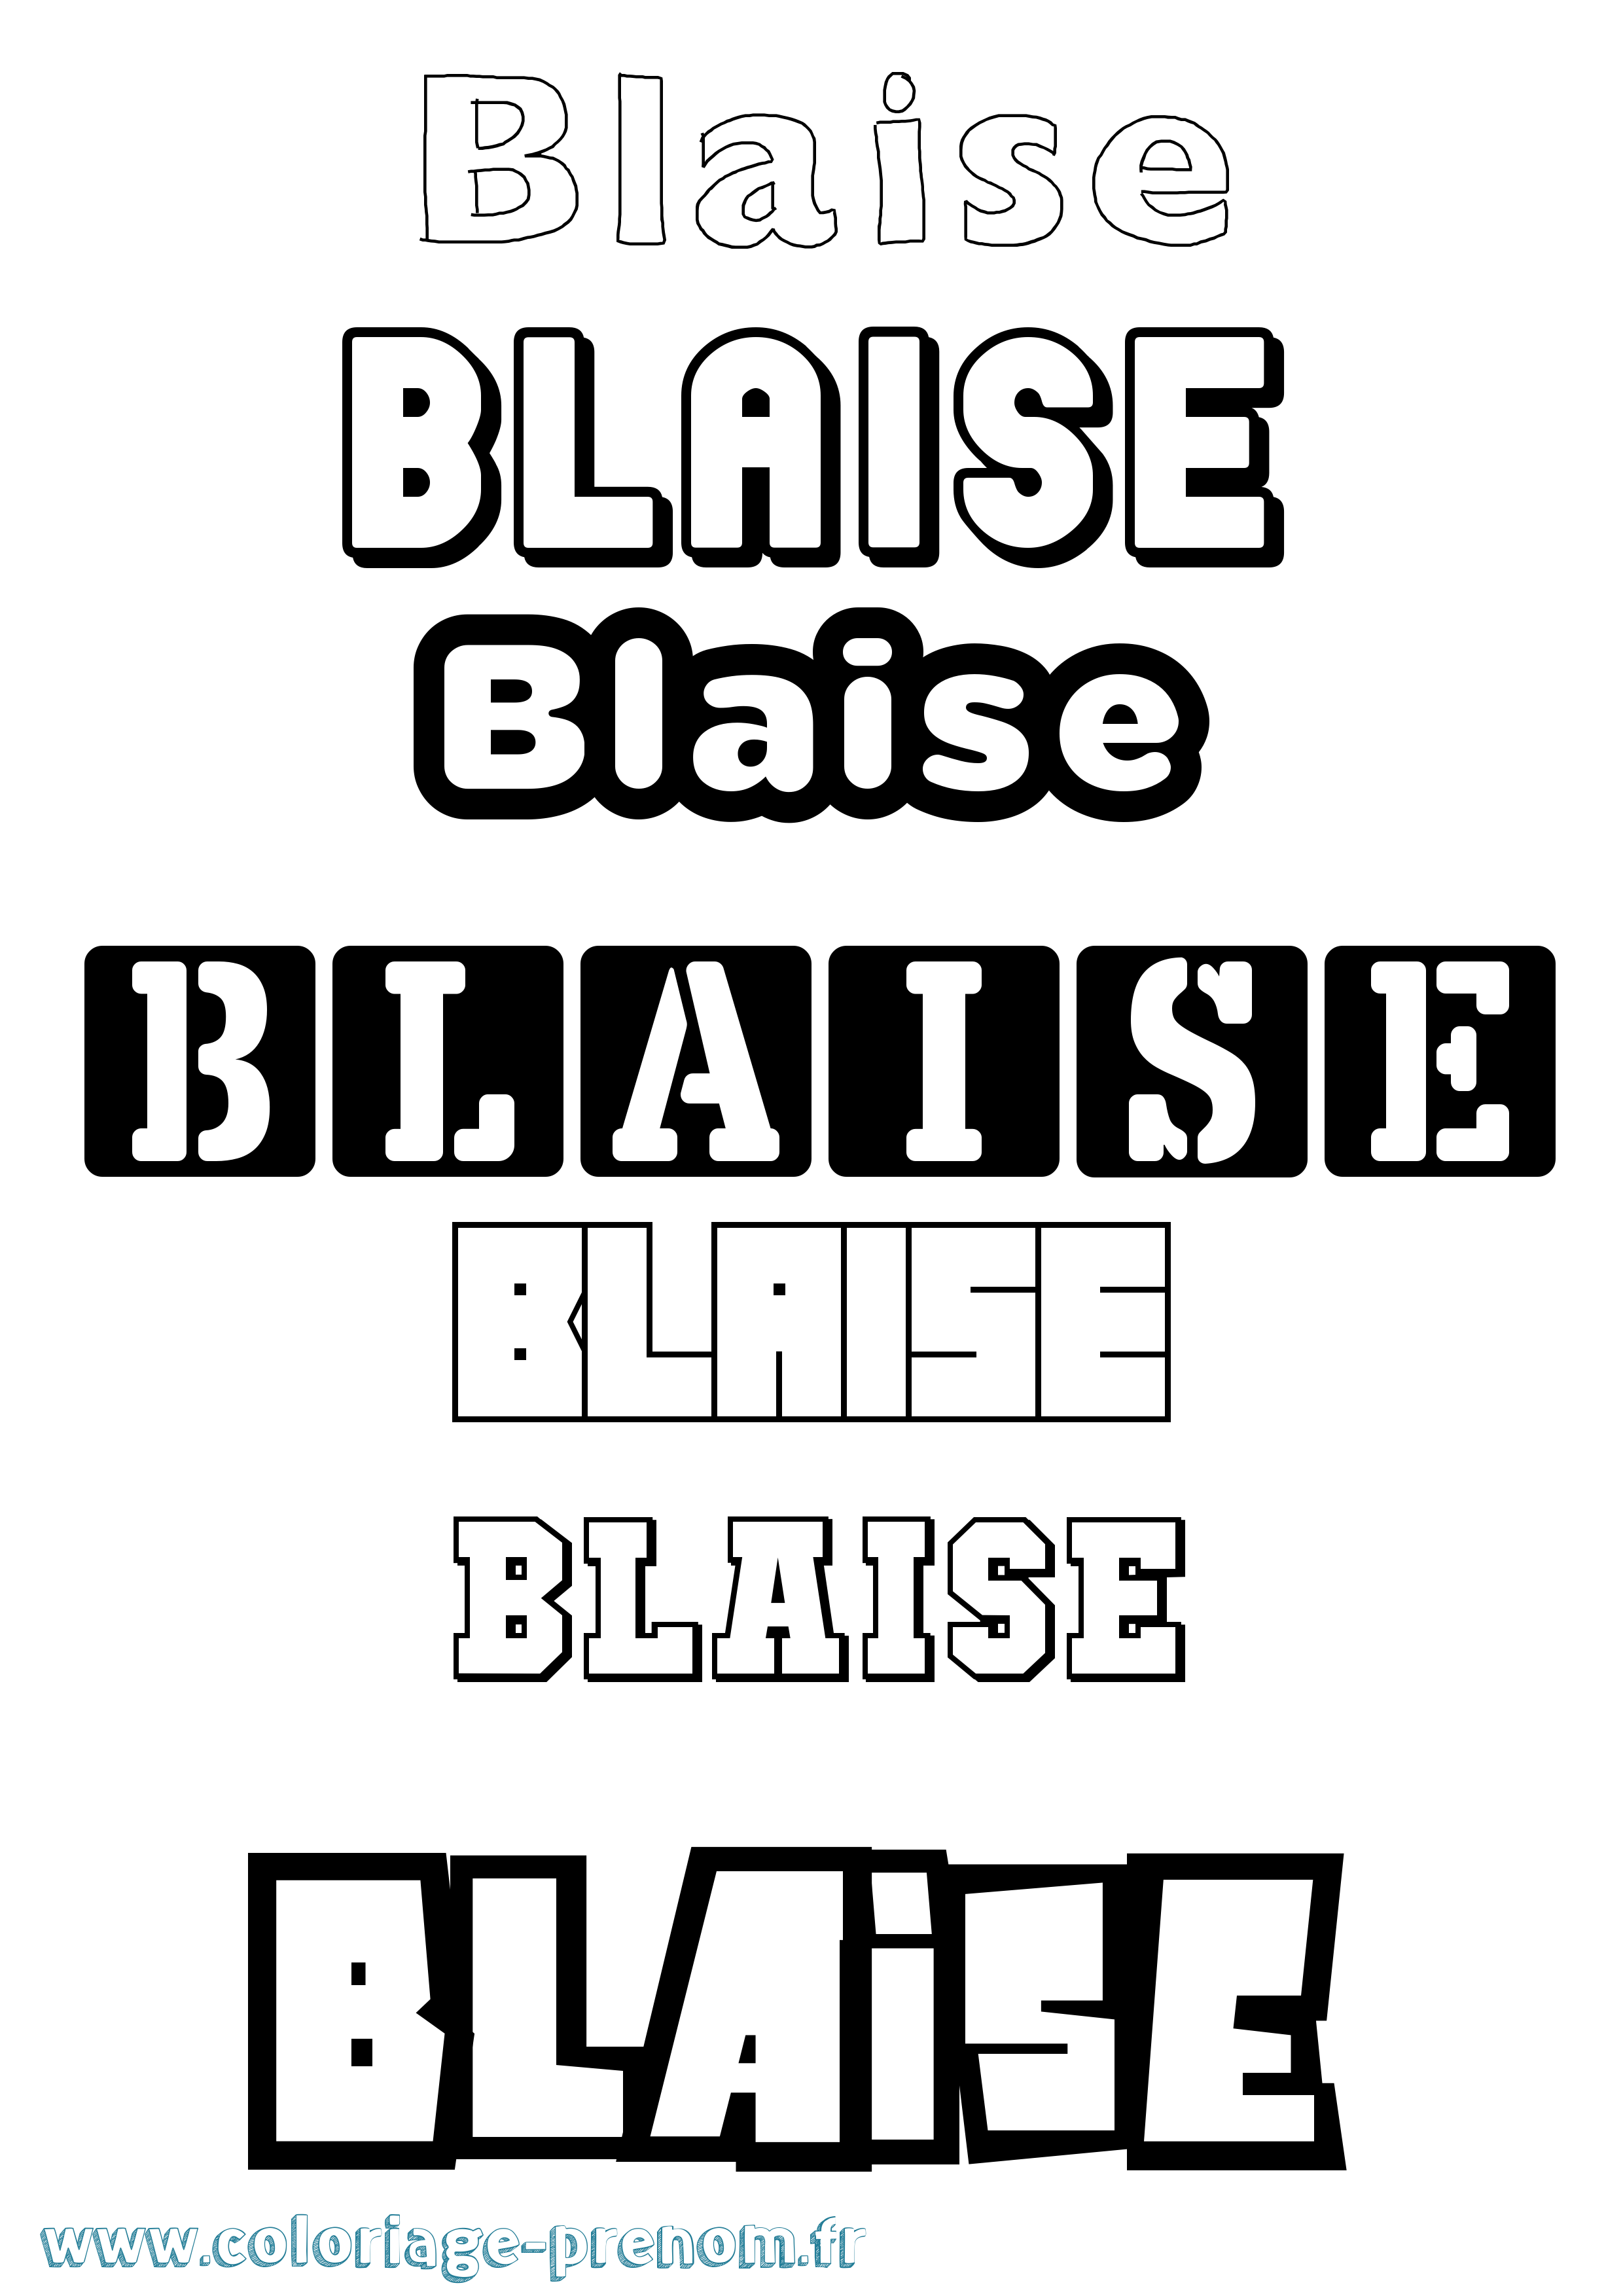 Coloriage prénom Blaise